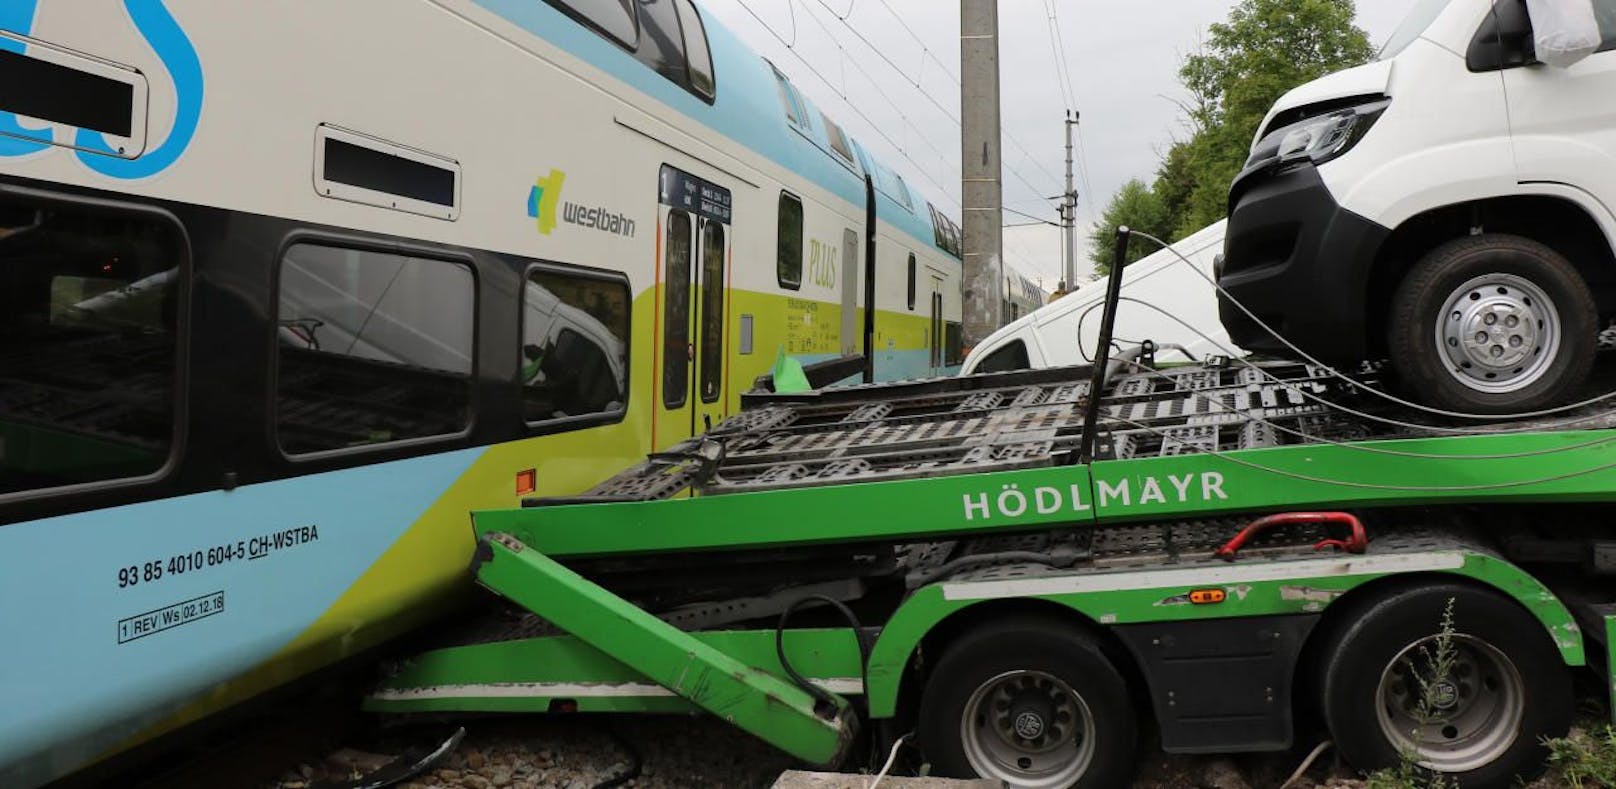 Zug kracht gegen Laster, Westbahn-Lok entgleist